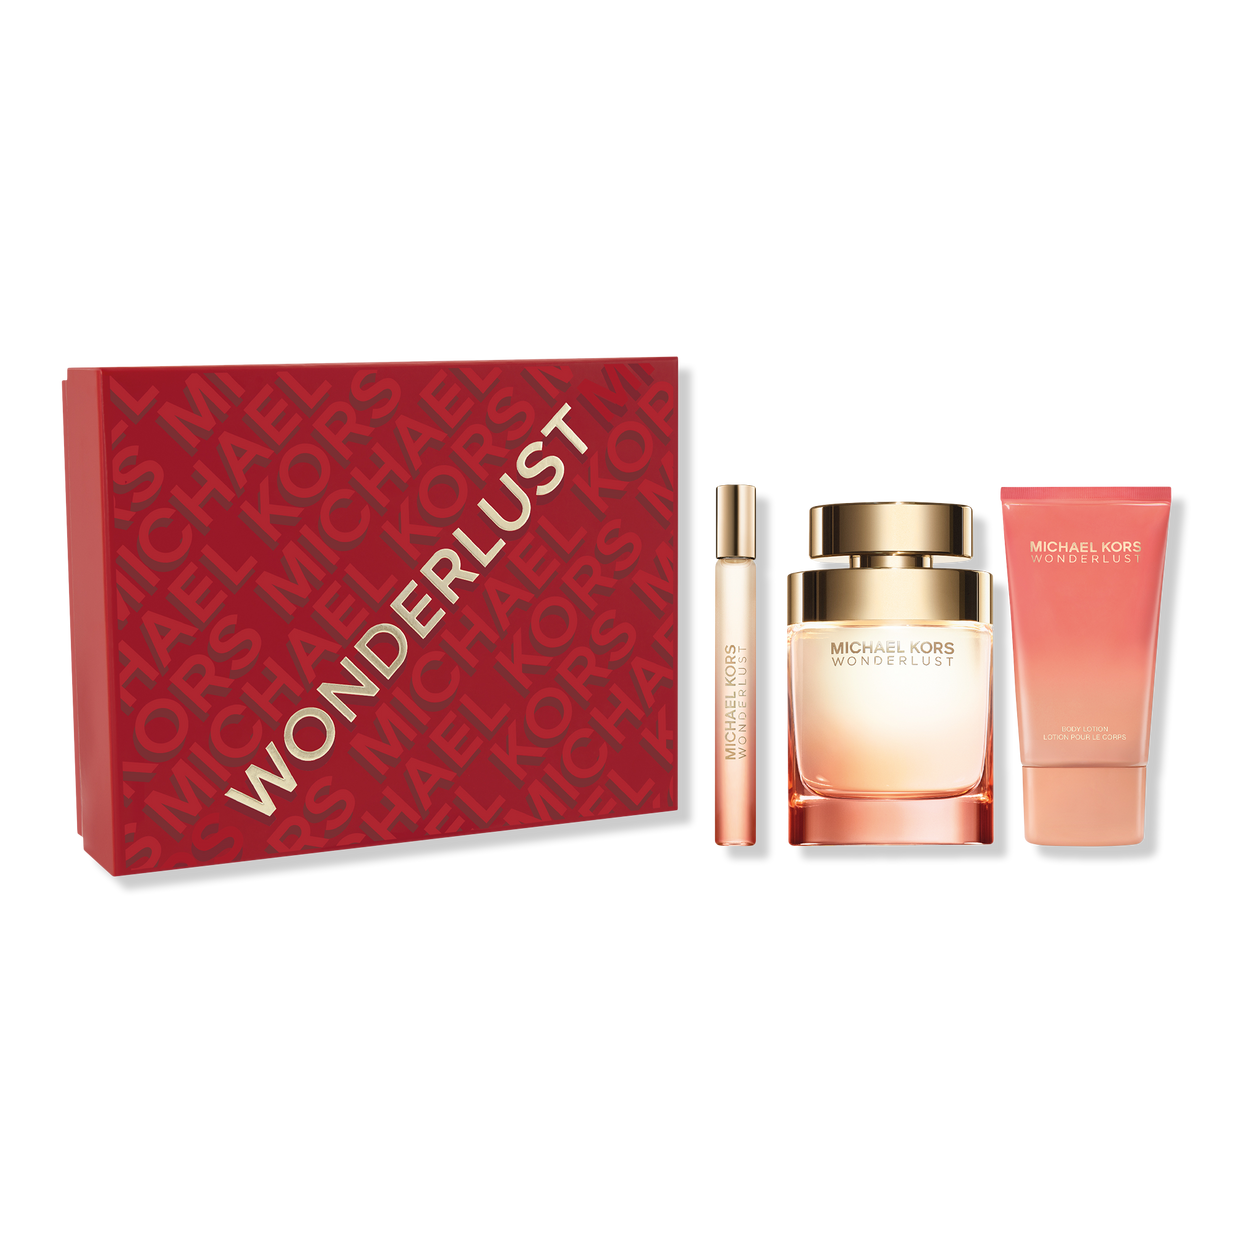 Wonderlust Eau de Parfum Gift Set - Michael Kors